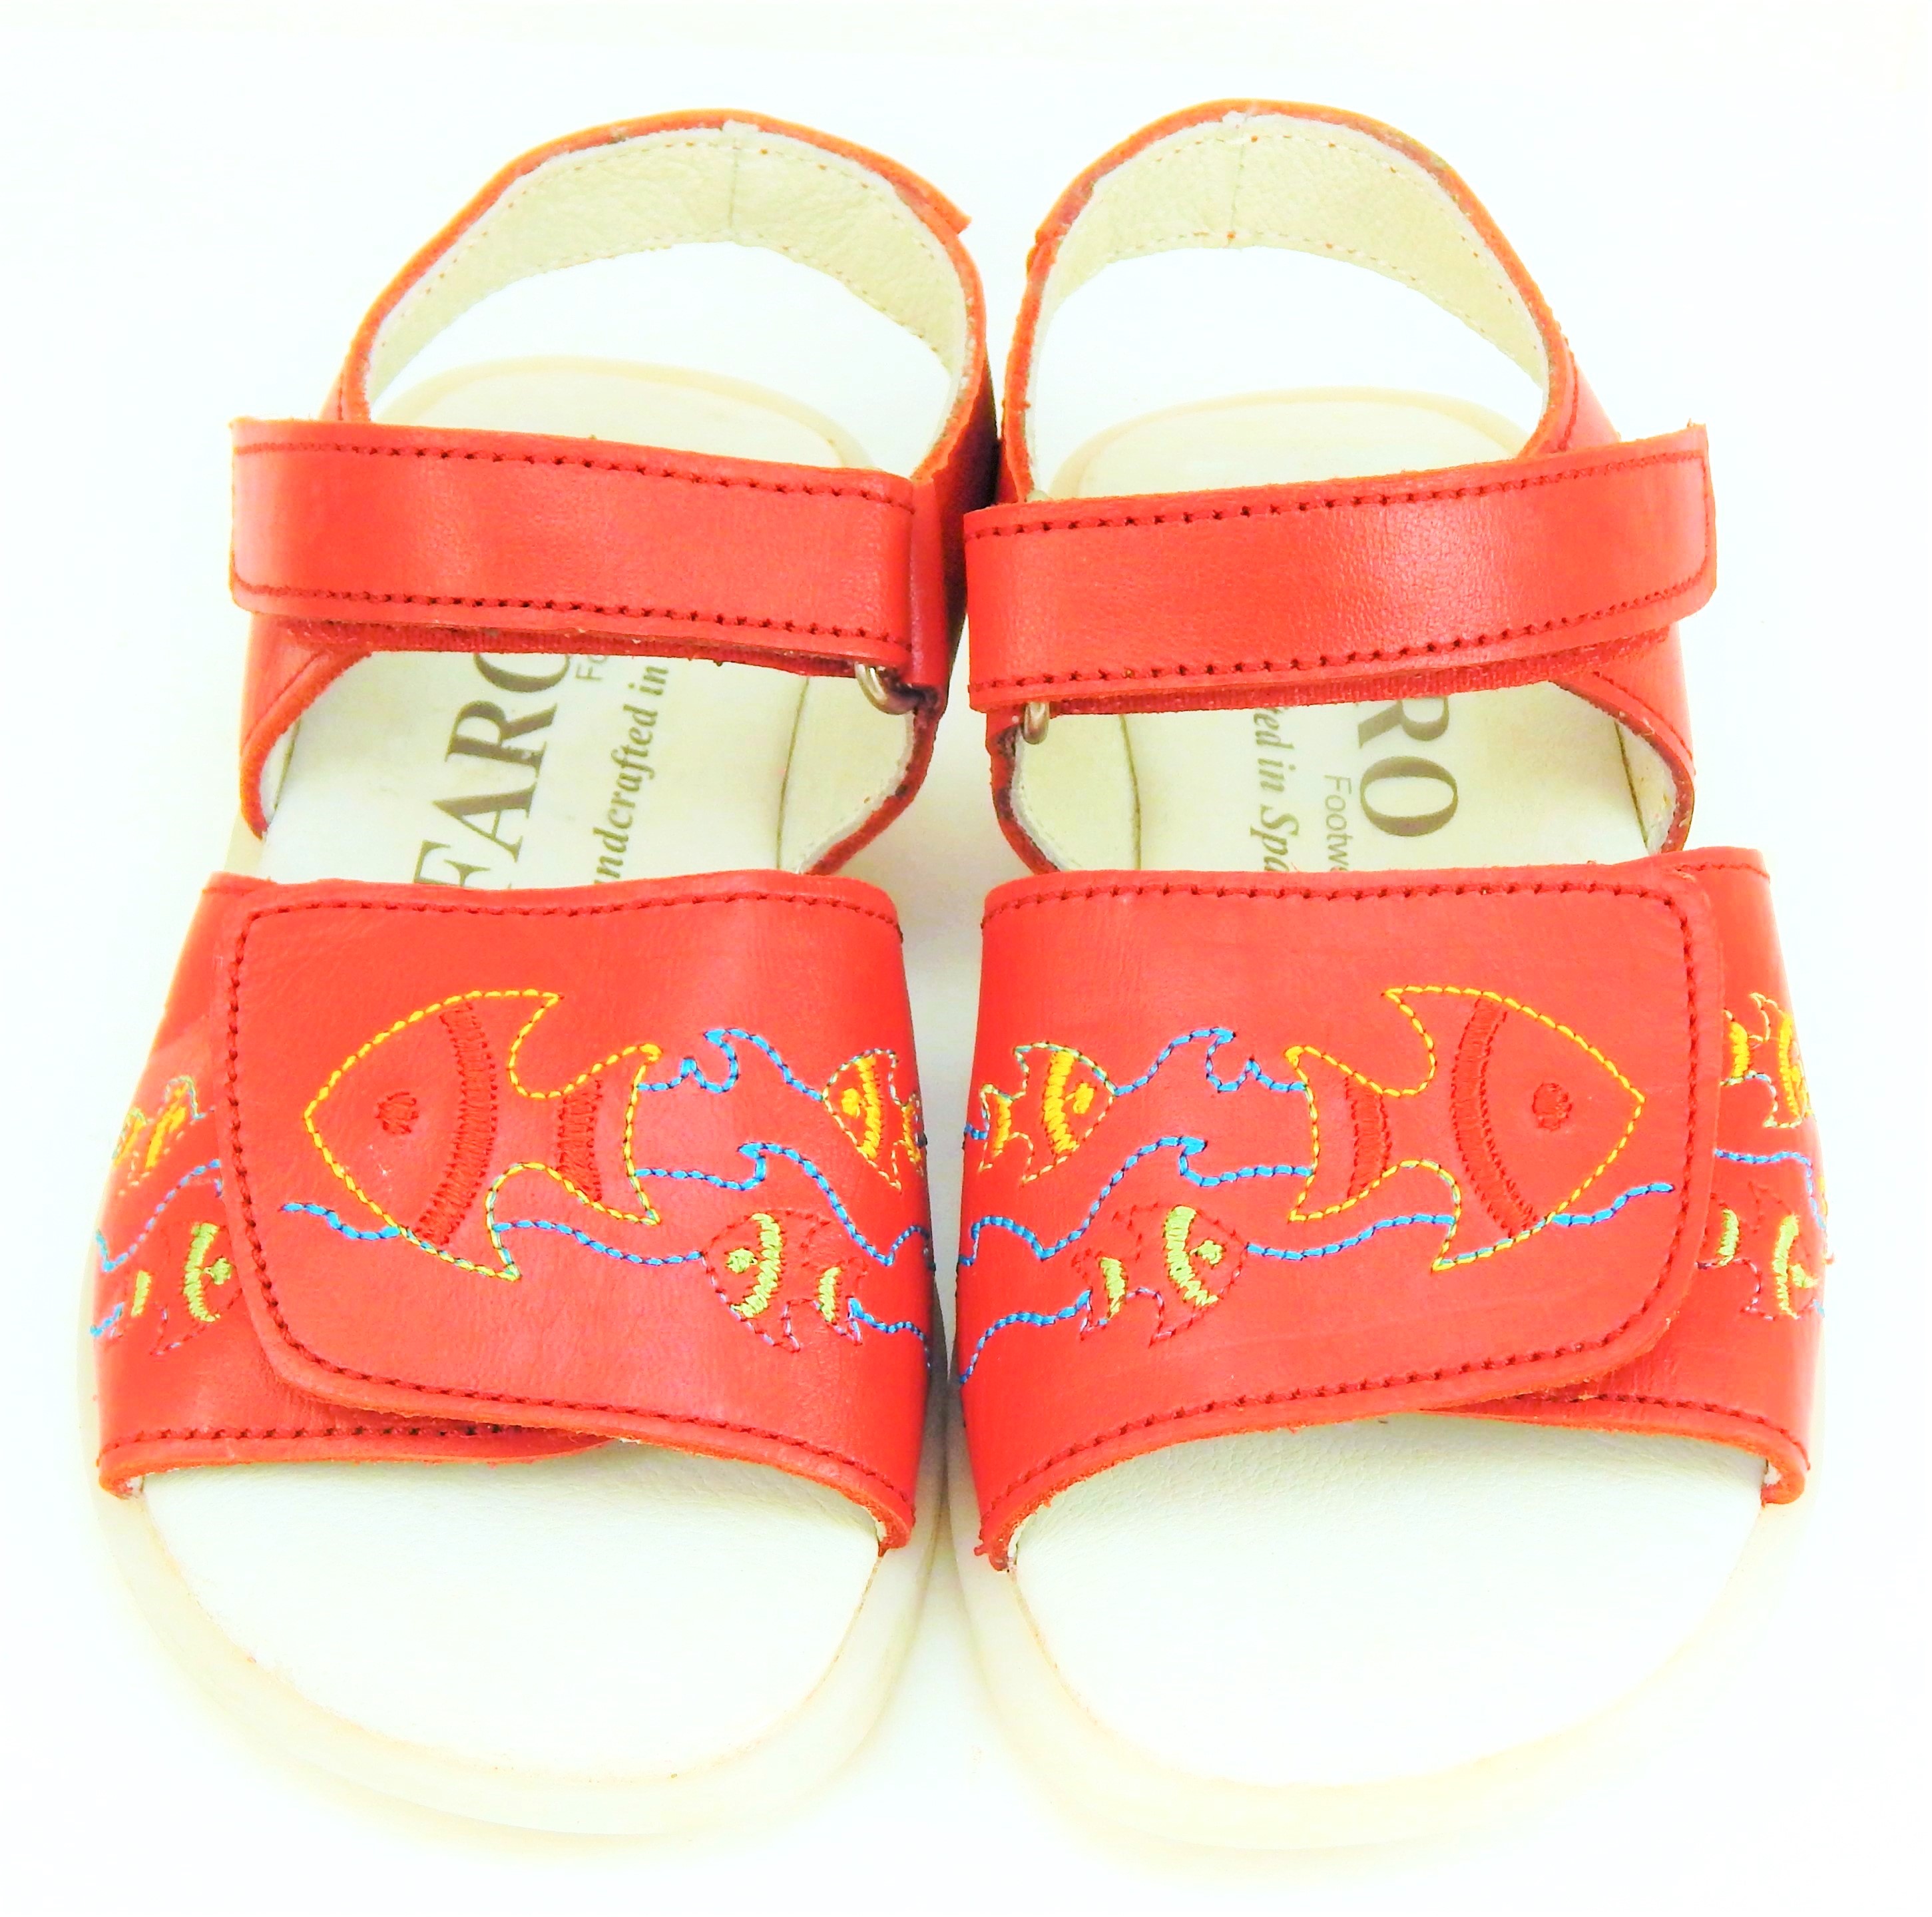 FARO 6S4486 - Red Fish Sandals - Euro 24 Size 7